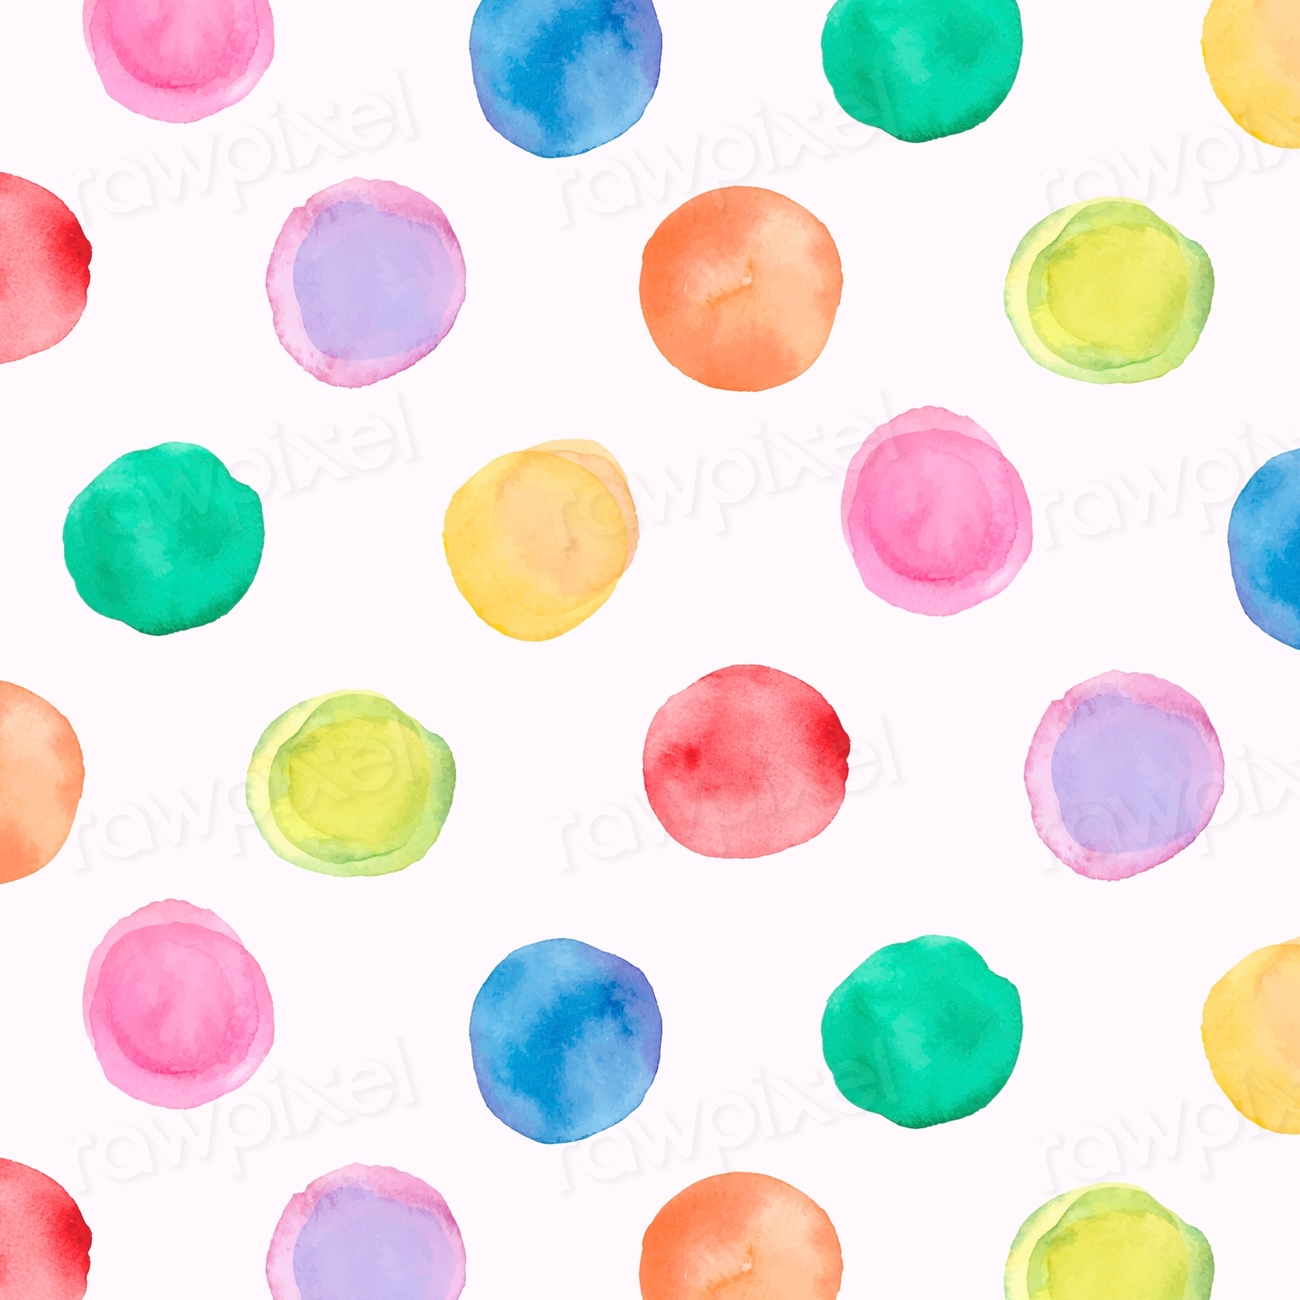 Polka dot seamless pattern, watercolor | Premium Vector - rawpixel